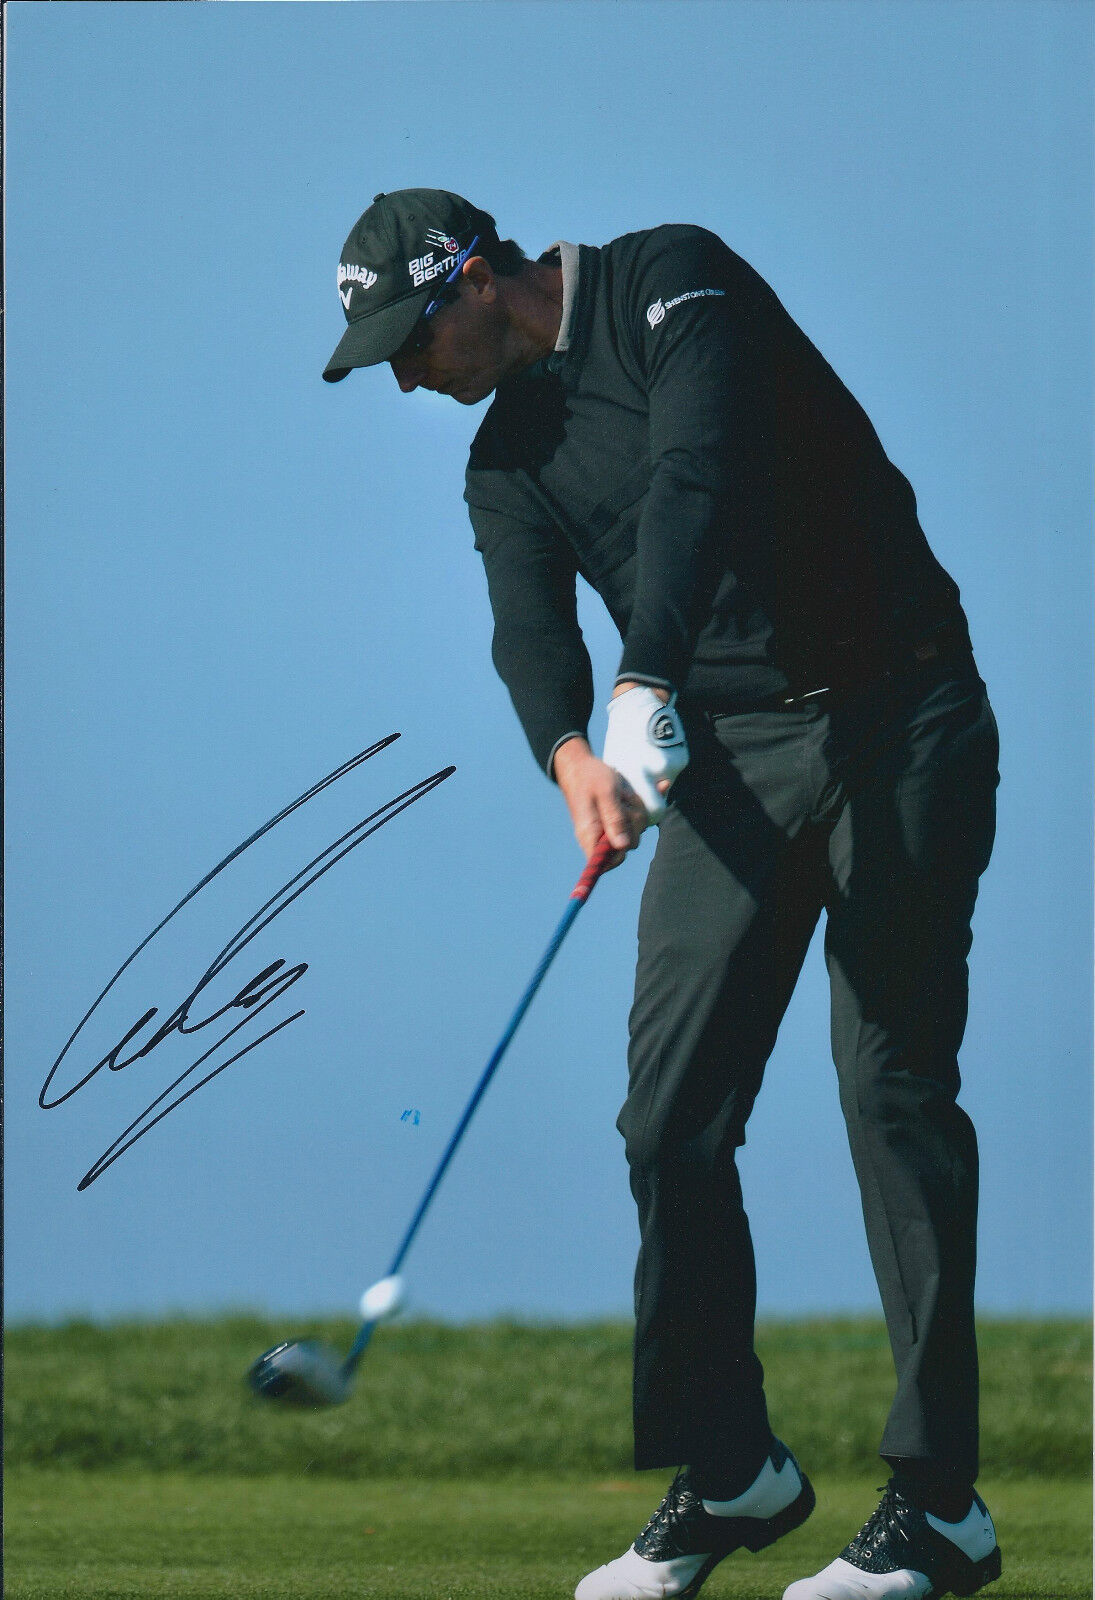 Nicolas COLSAERTS SIGNED Autograph Photo Poster painting AFTAL COA Belgian PGA European Tour